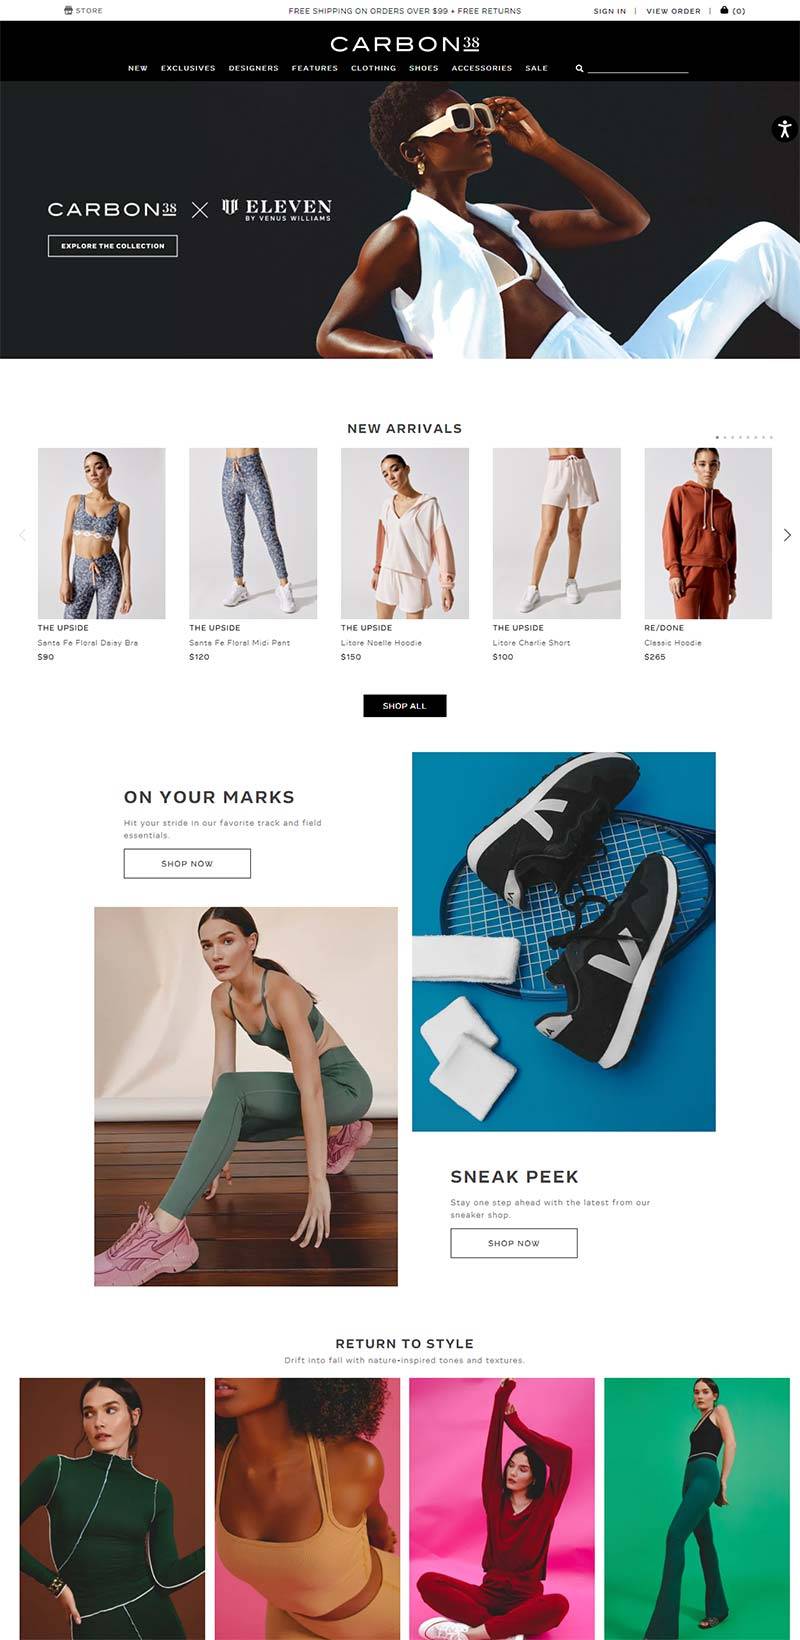 Carbon38 美国女性运动服饰品牌购物网站